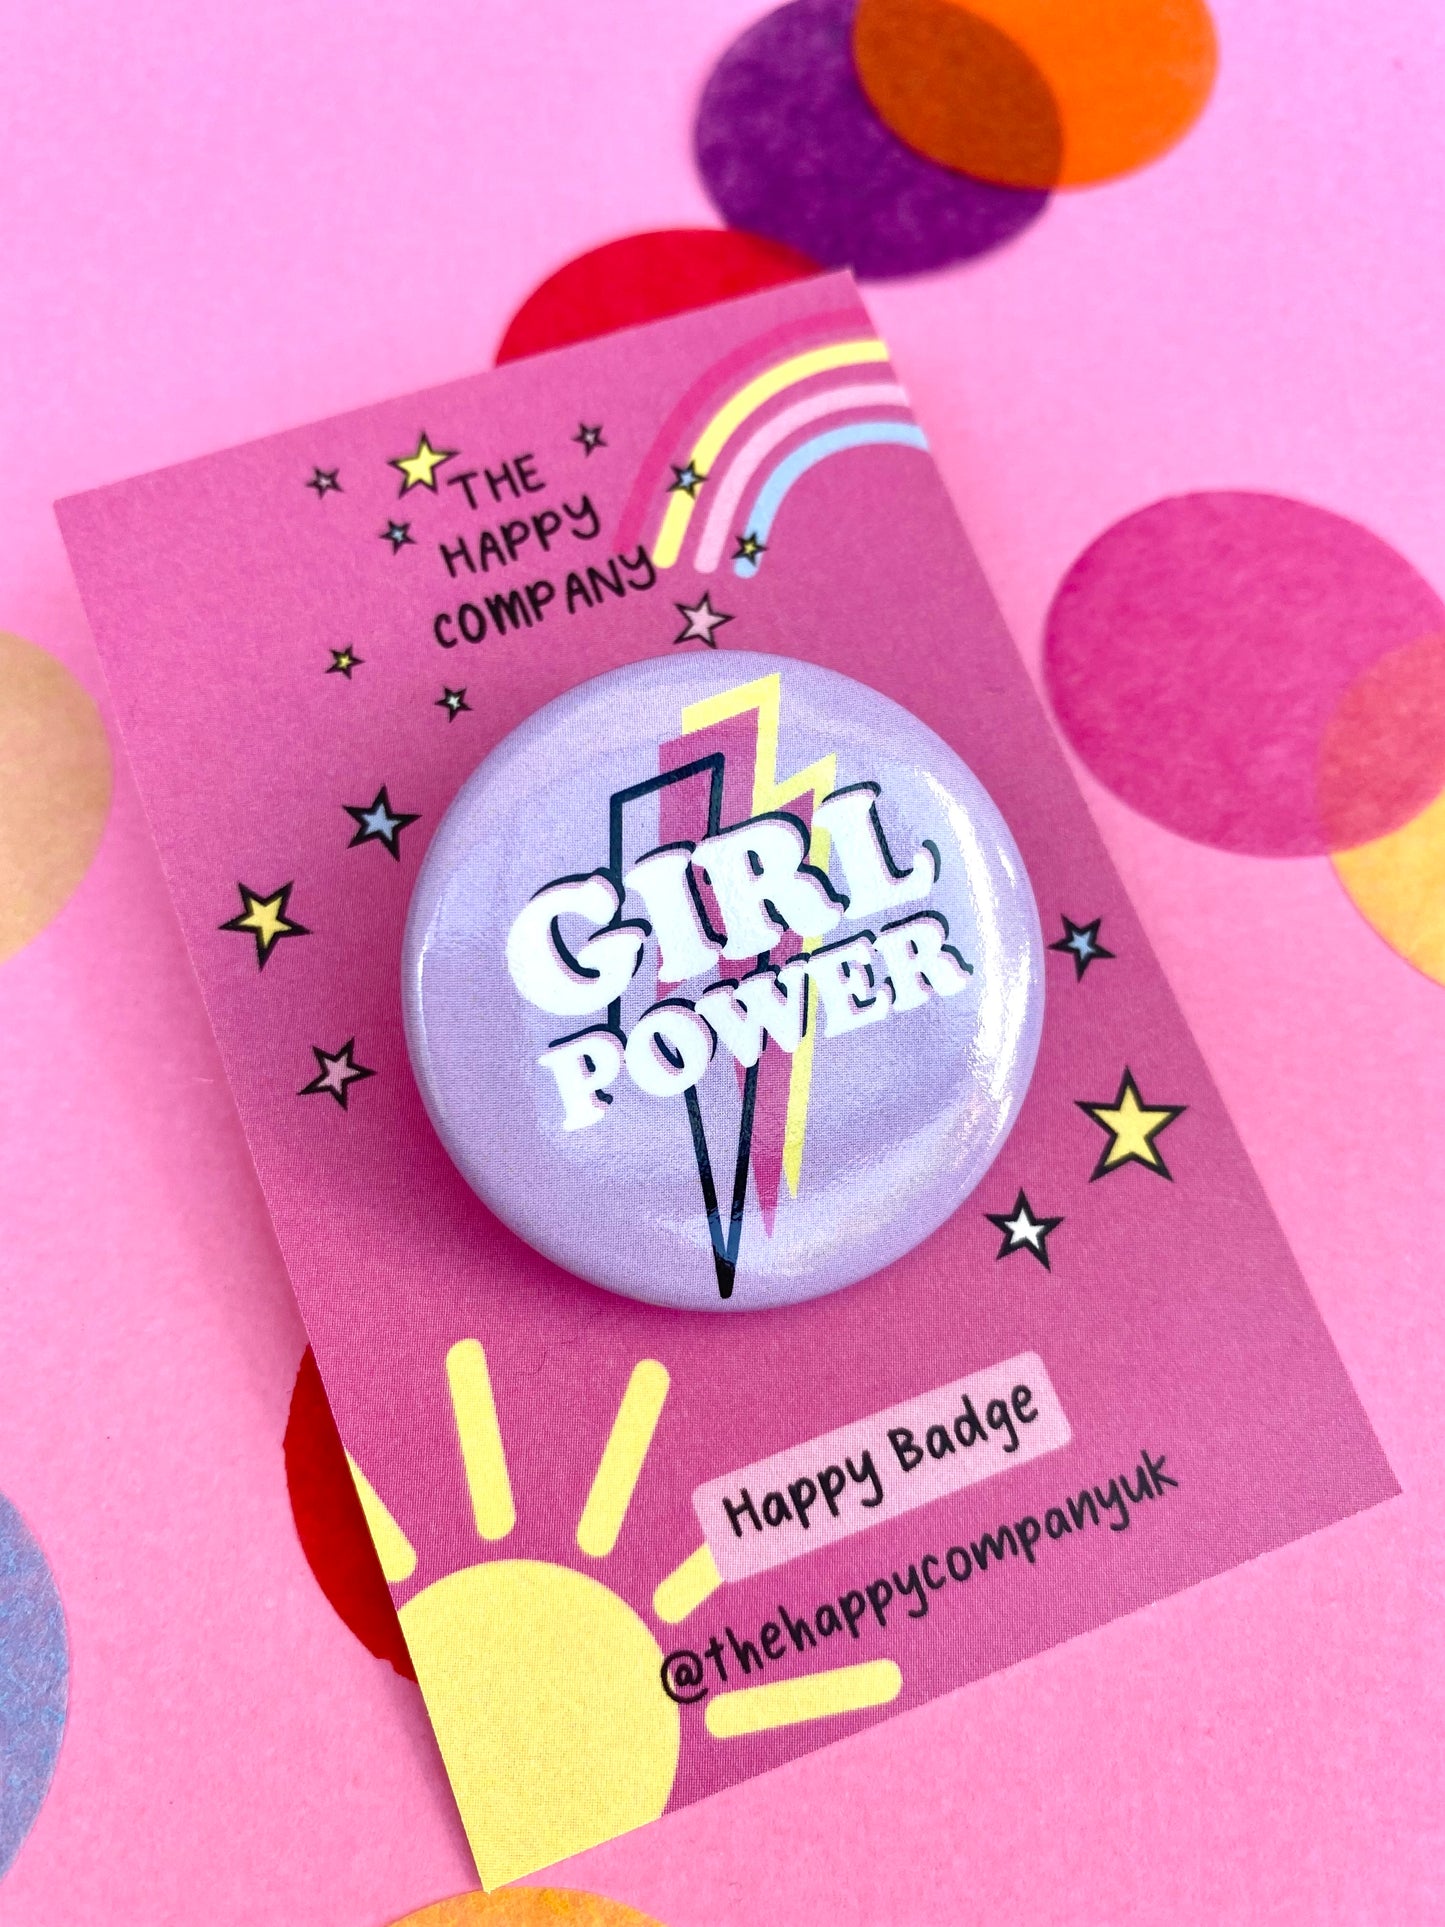 Girl Power Pin Badge